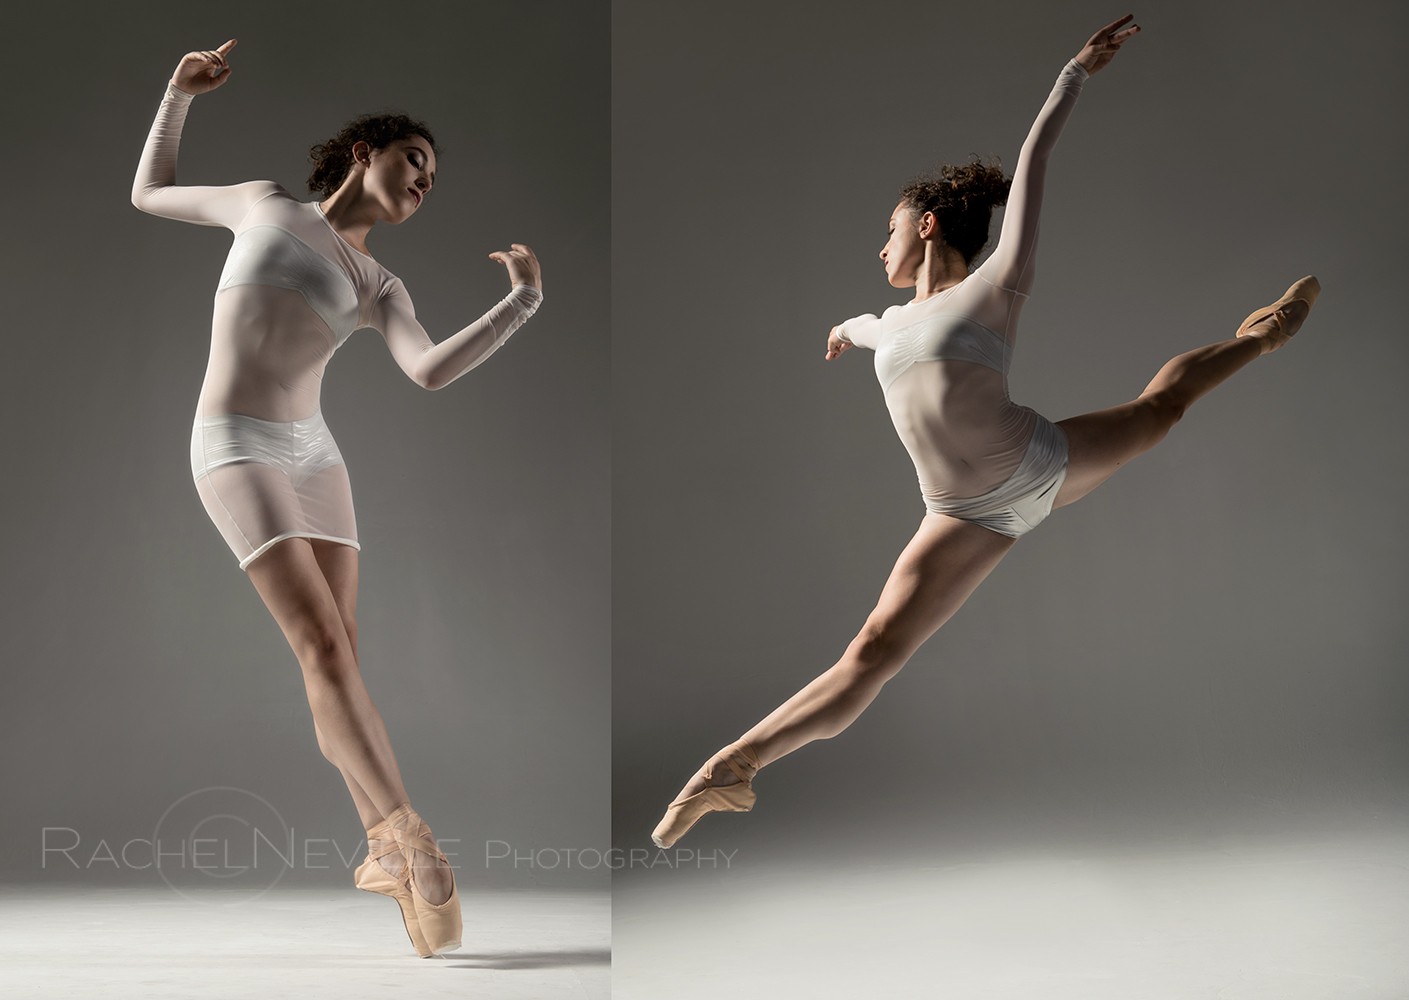 sheer diaphanous ballet dancer photos rachel neville nyc dance photographer